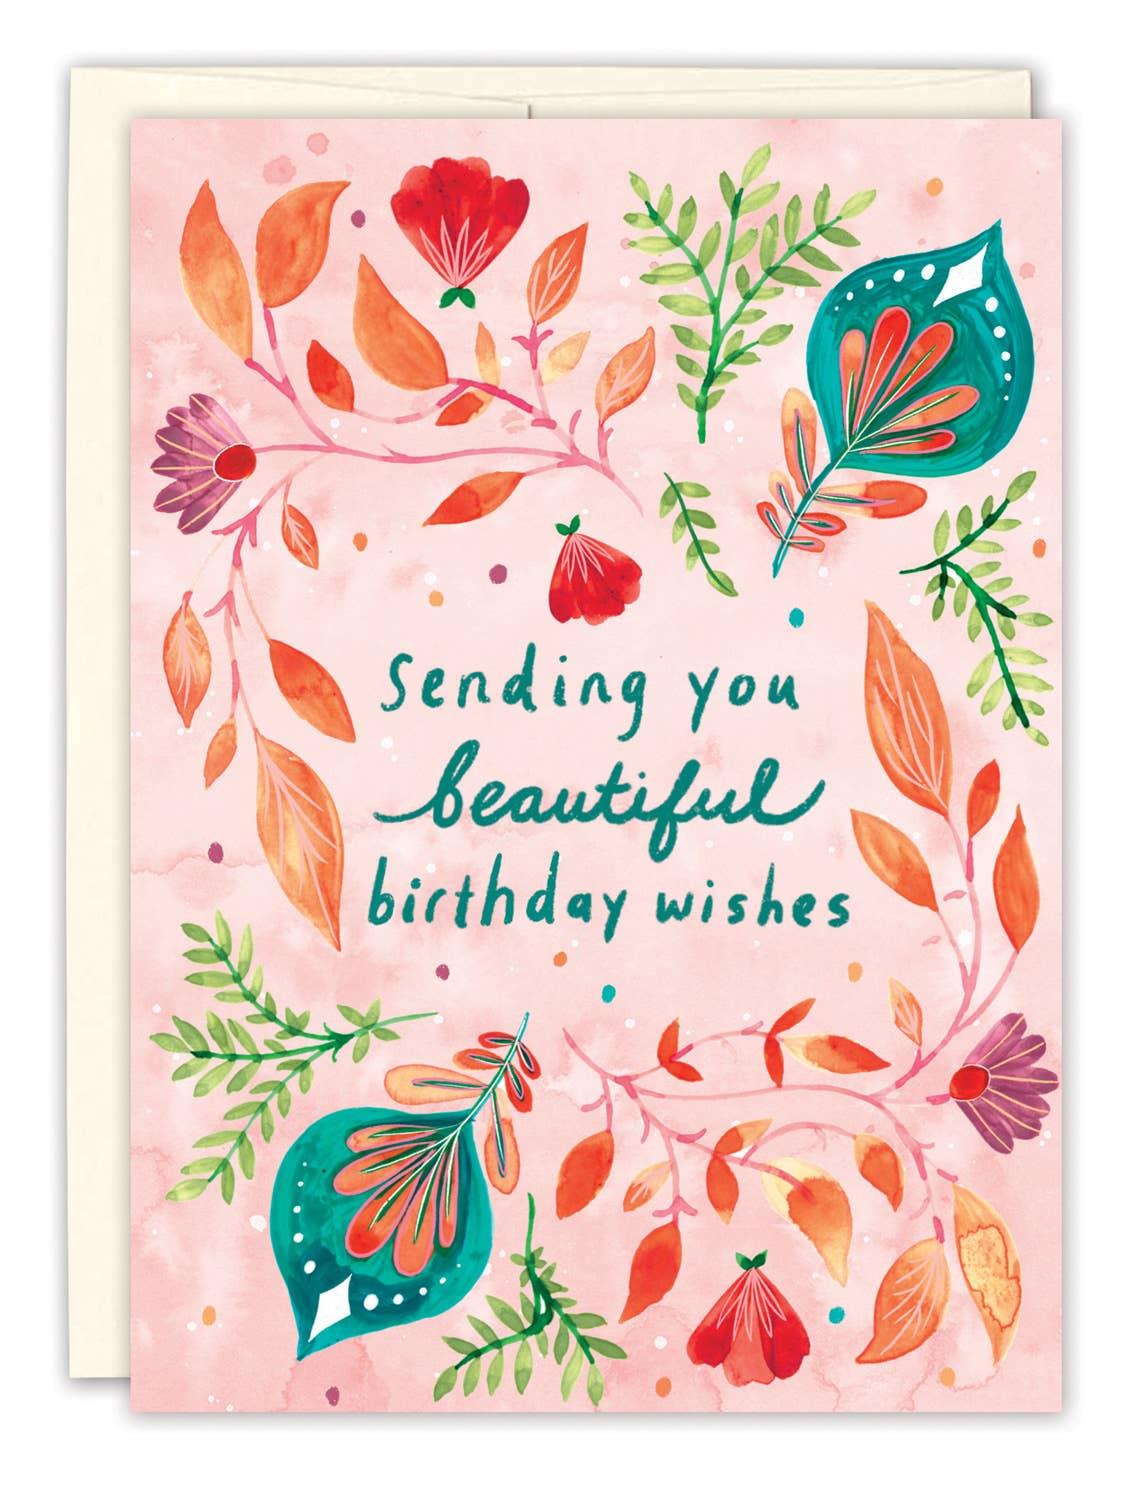 Biely & Shoaf - Beautiful Wishes Birthday Card